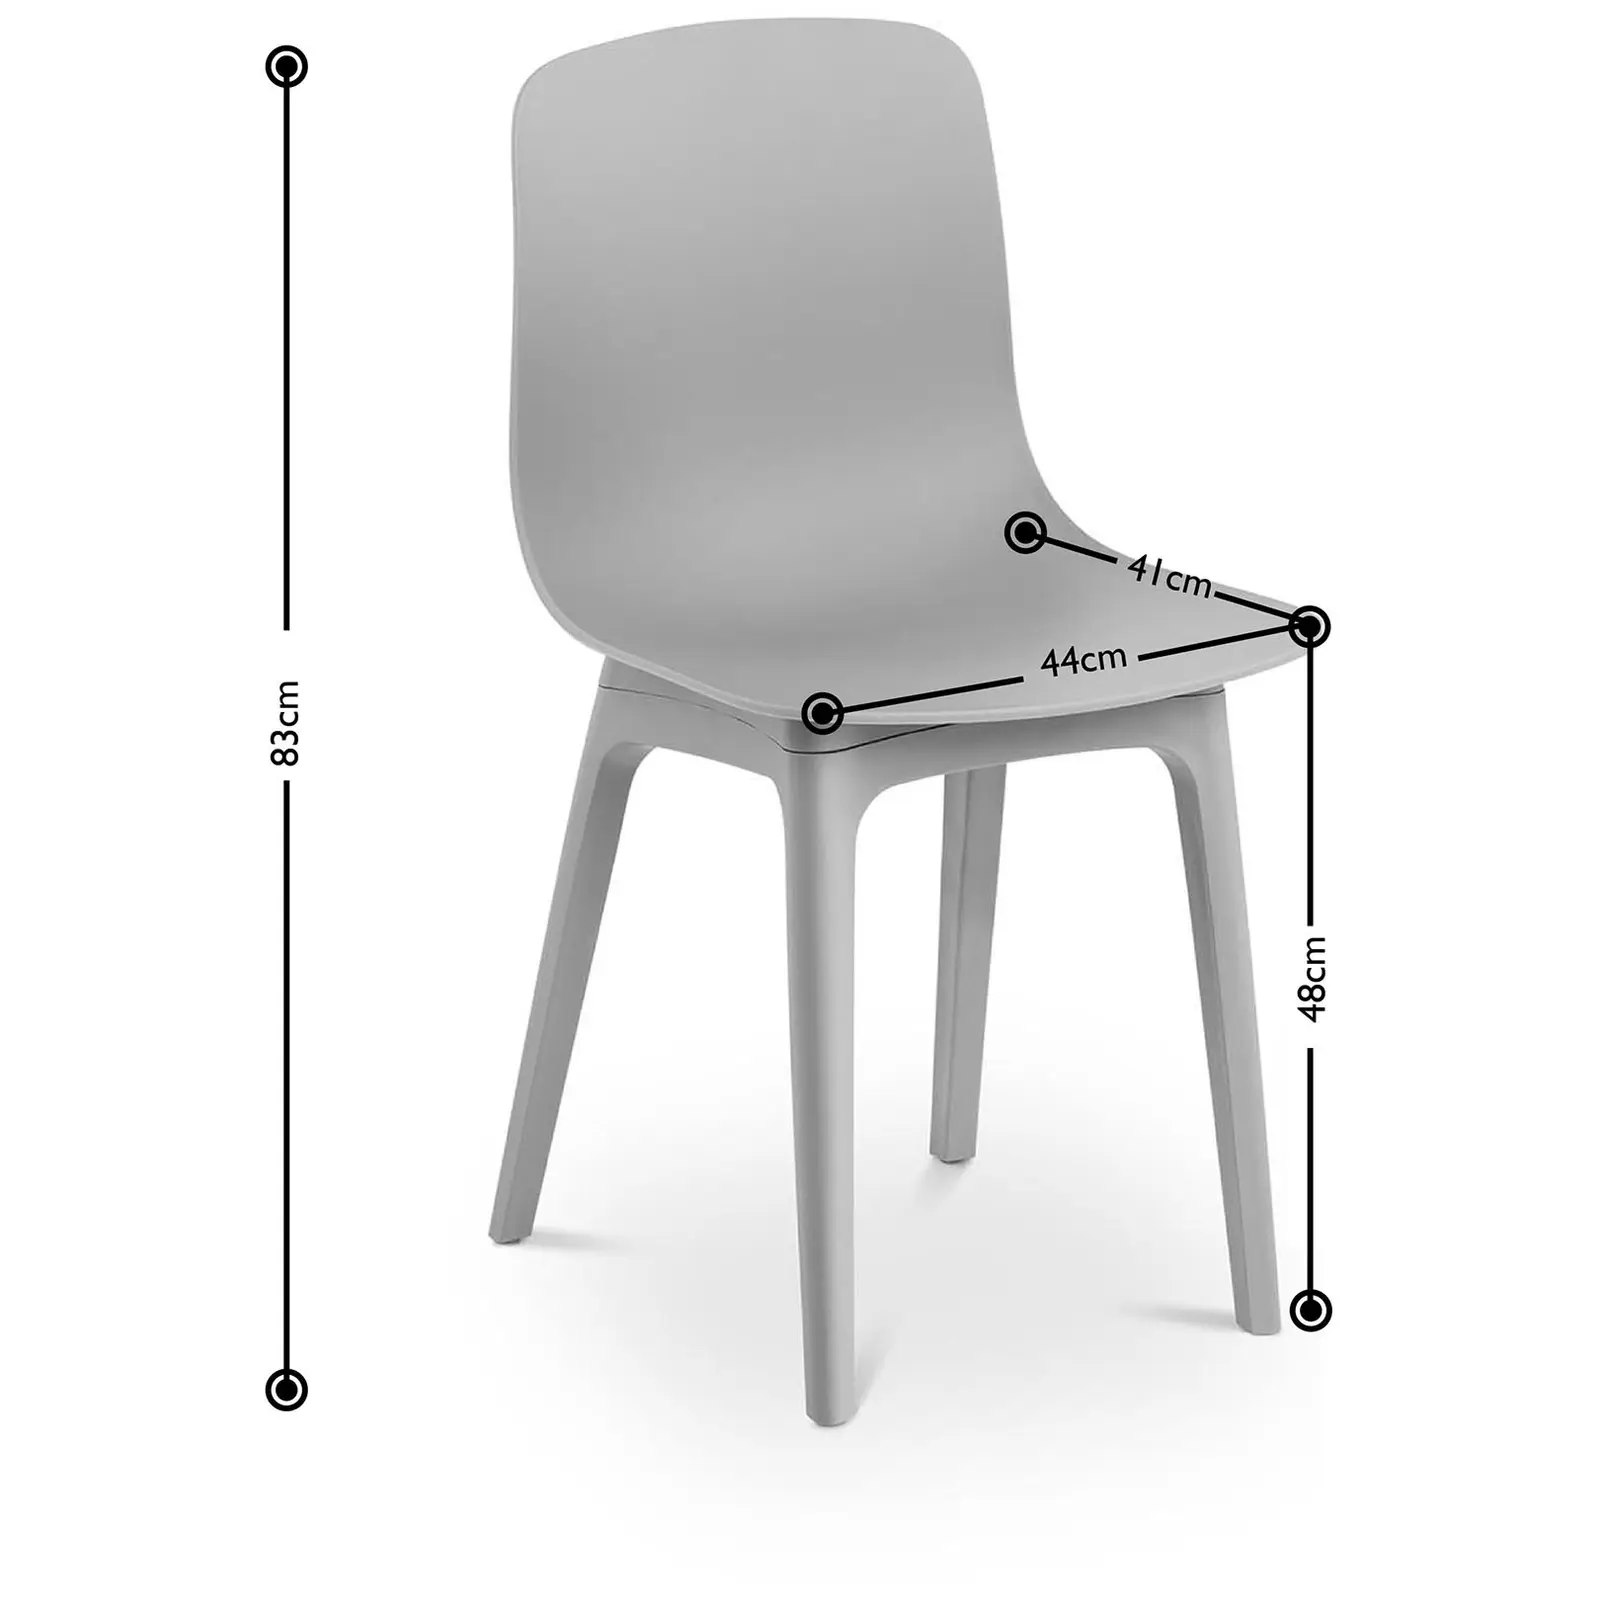 Stuhl - 2er Set - bis 150 kg - Sitzfläche 44 x 41 cm - grau